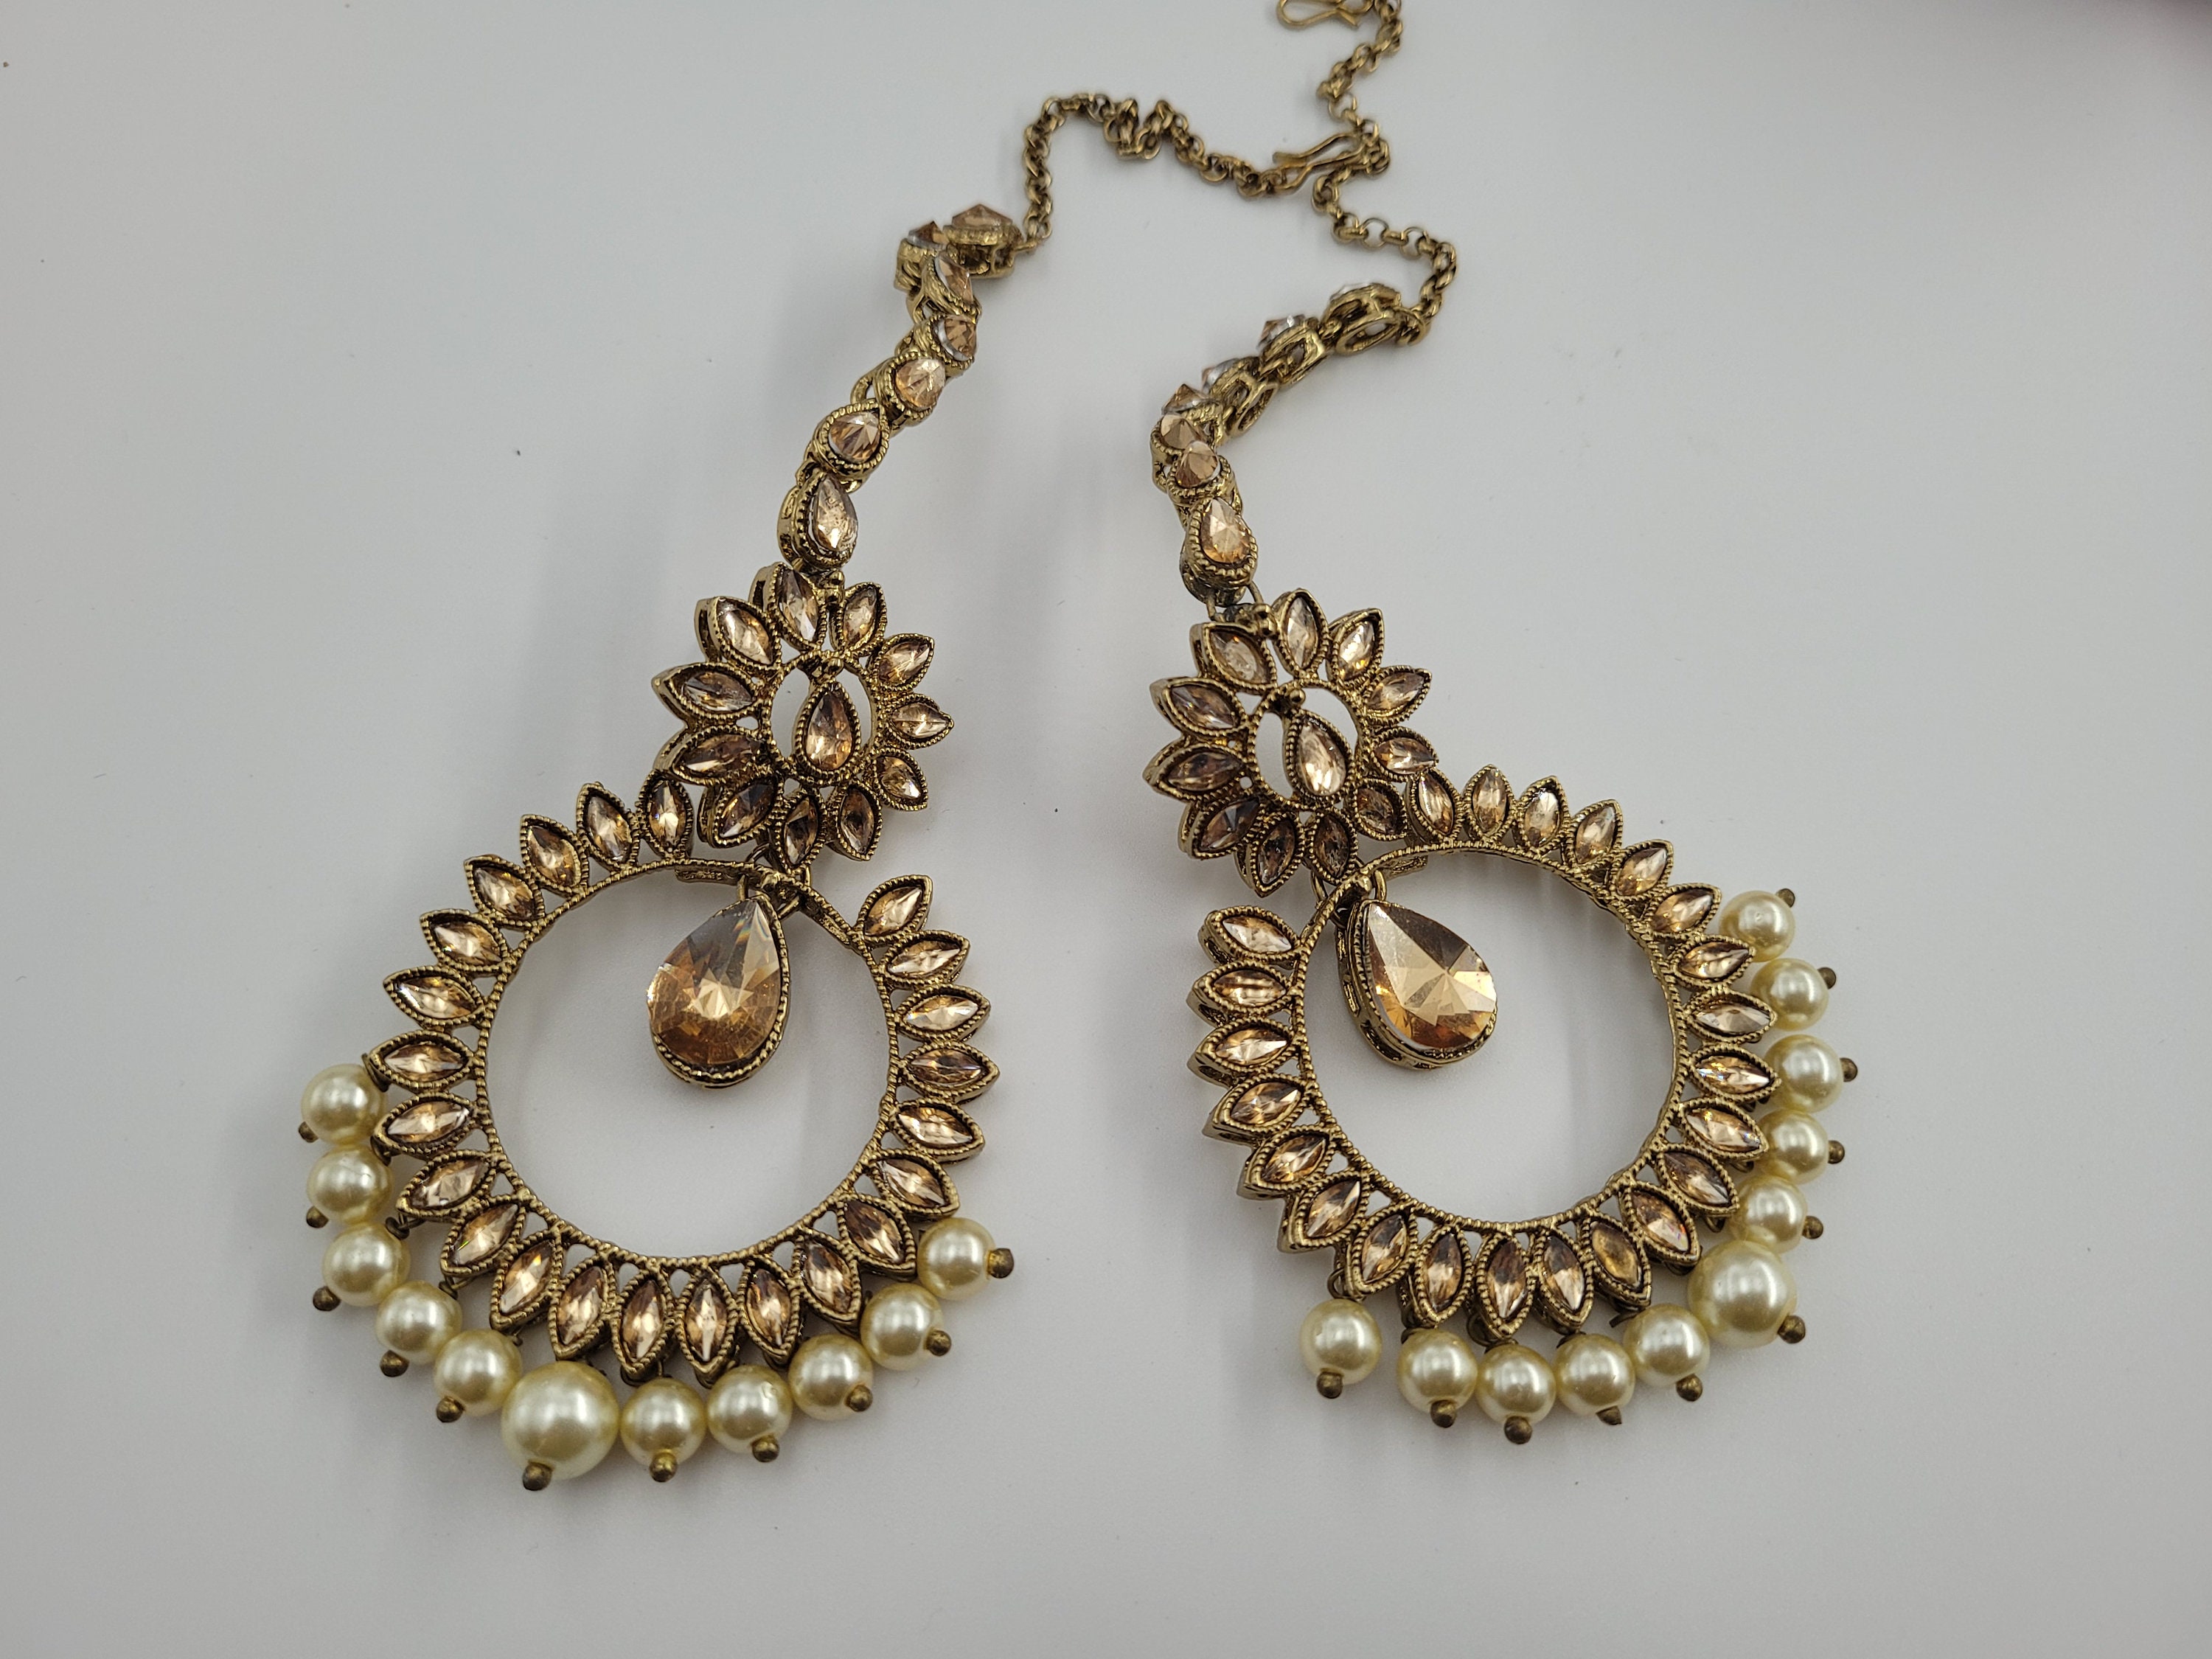 Gold Polki Chandbali Earrings Indian Bridal Jewelry Indian Earrings Chaandbali Indian Fashion Indian Jewelry Ethnic Jewelry